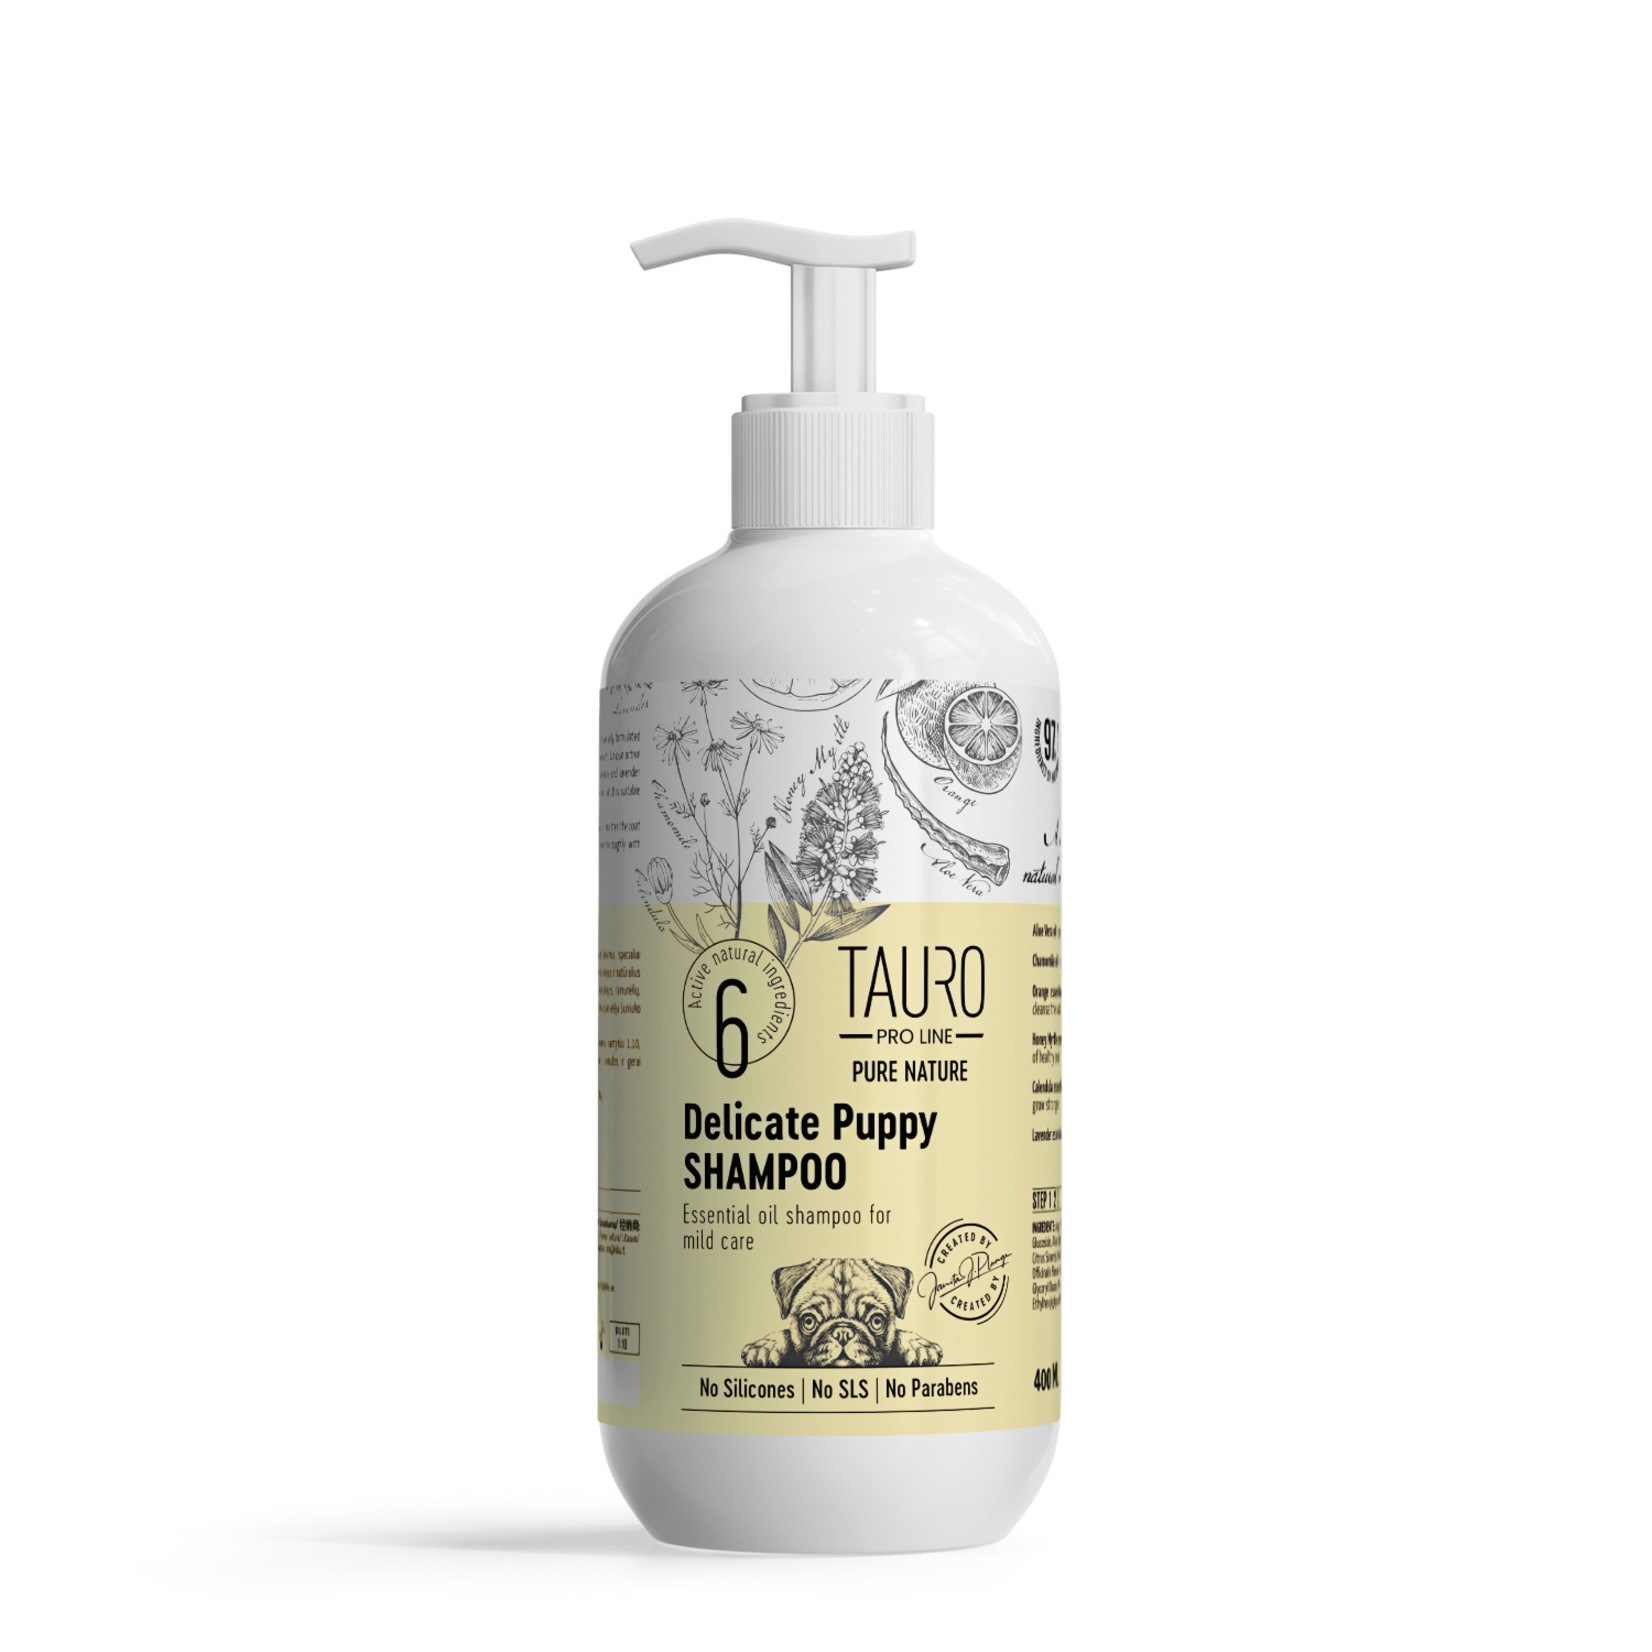 Tauro Pro Line Puppy shampoo